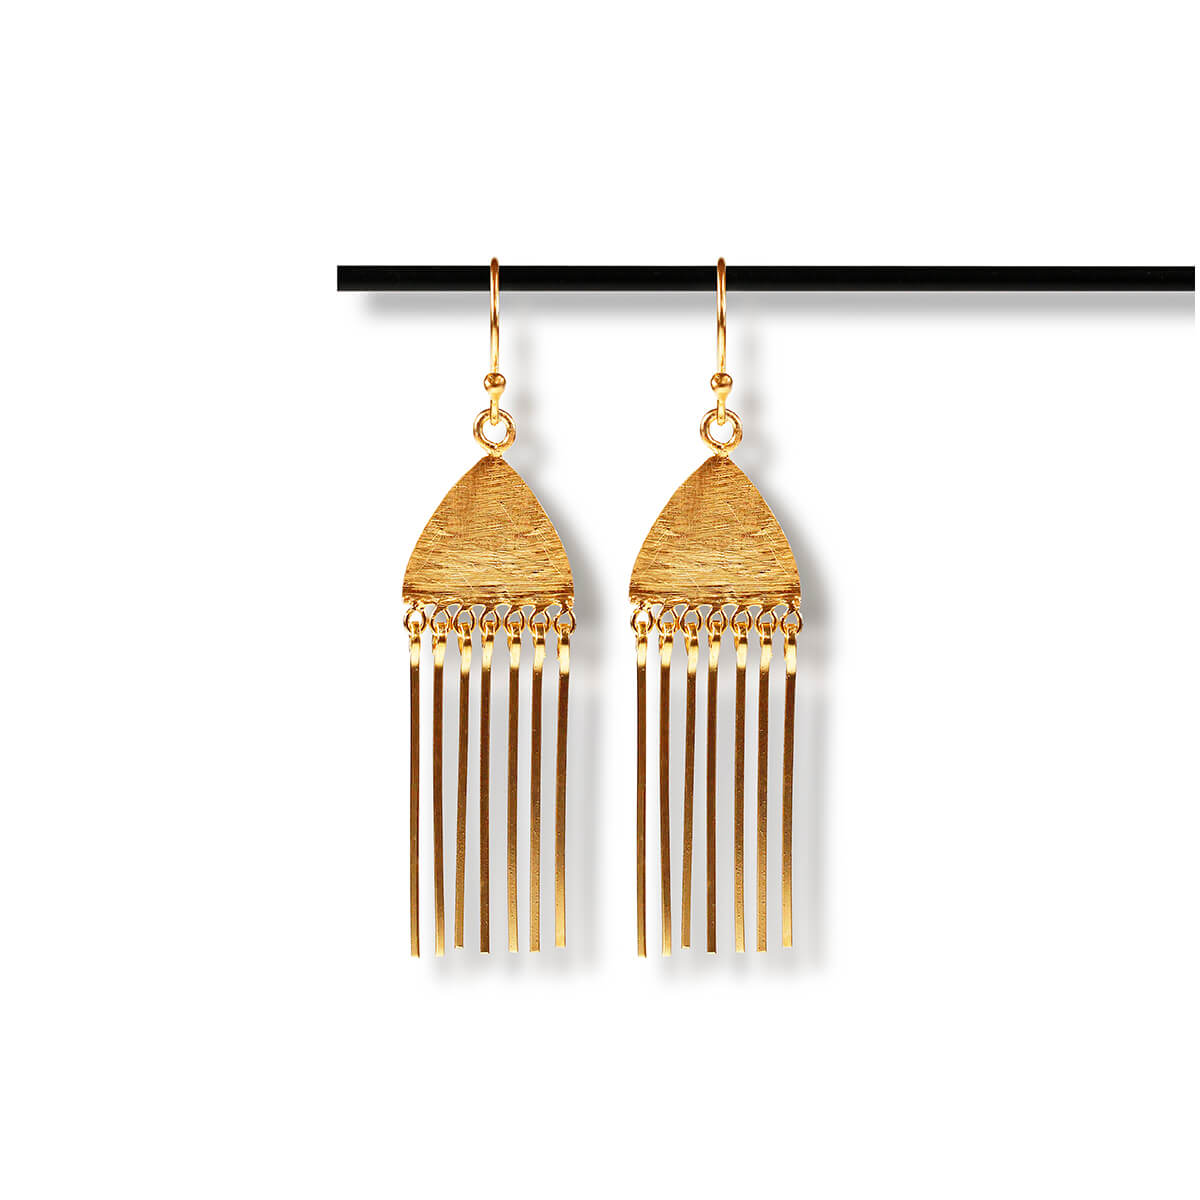 Eaven earrings - Gold